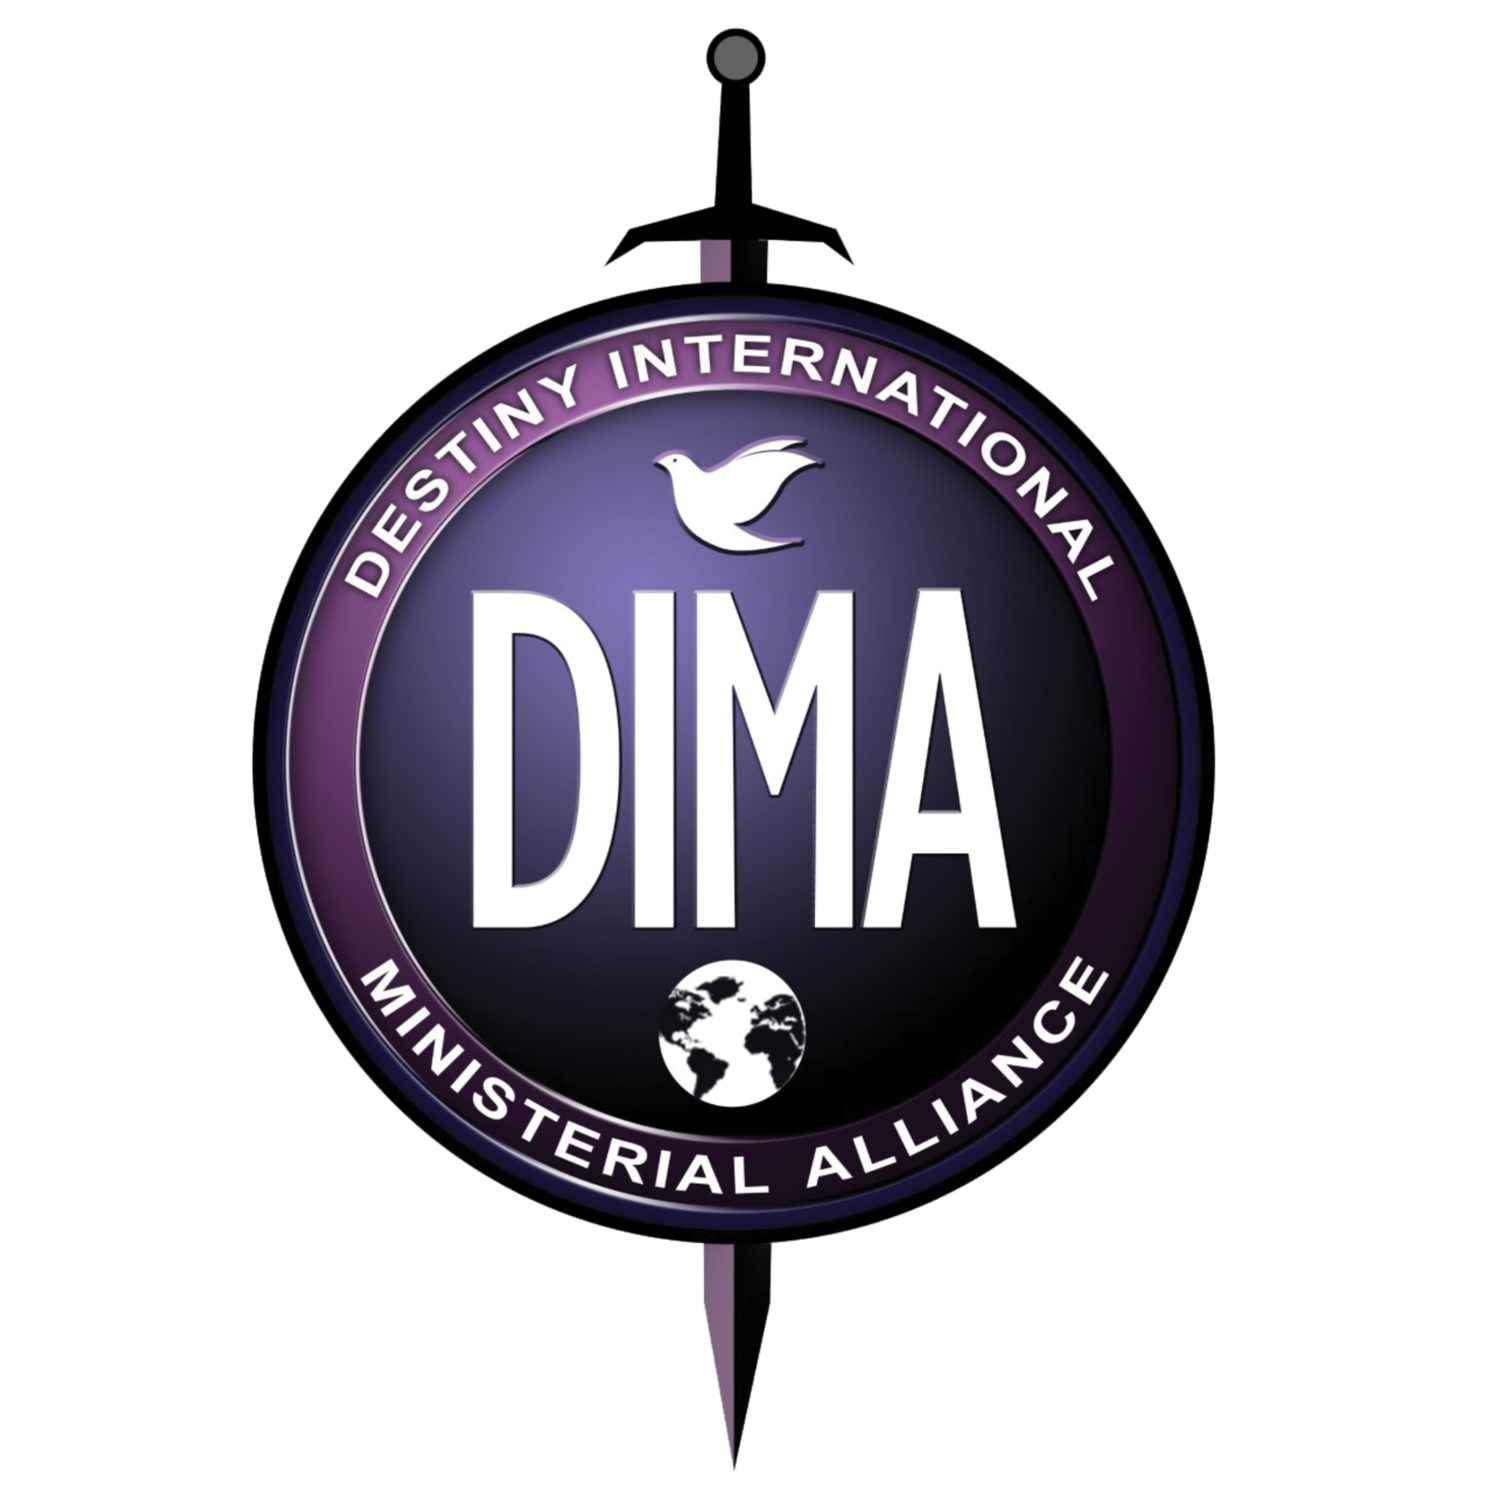 Destiny International Ministerial Alliance